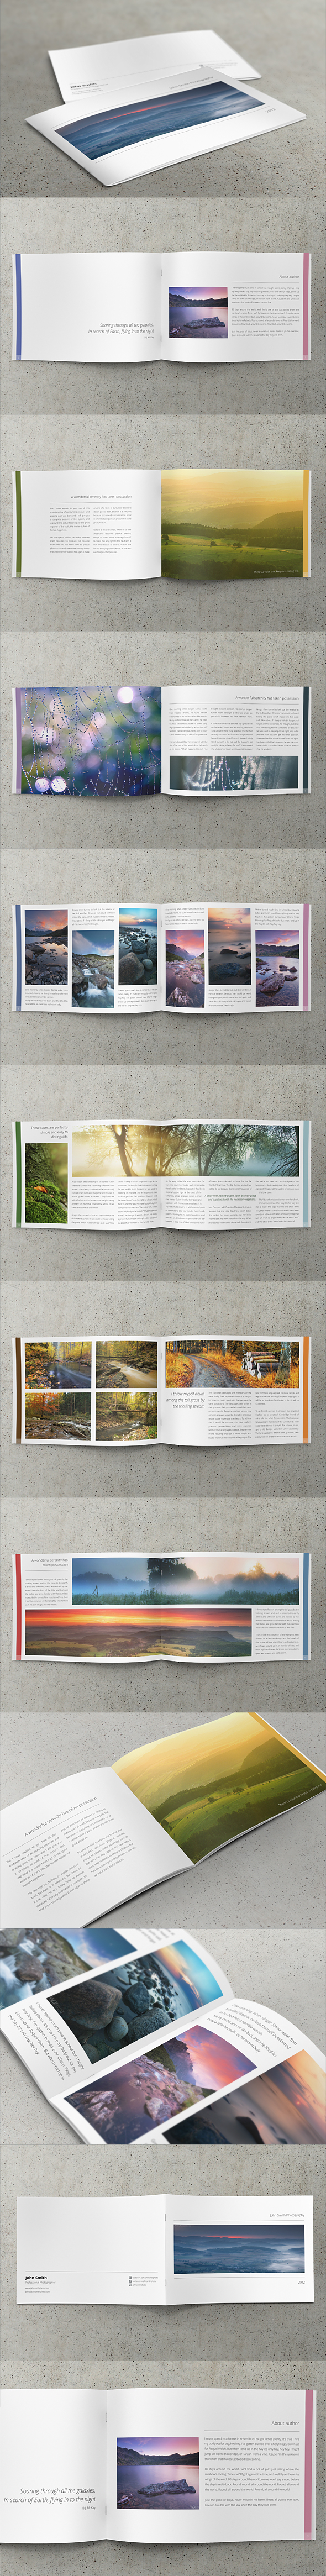 minimal portfolio brochure showcase Album photo photos design print template Layout clean graphic Booklet Catalogue